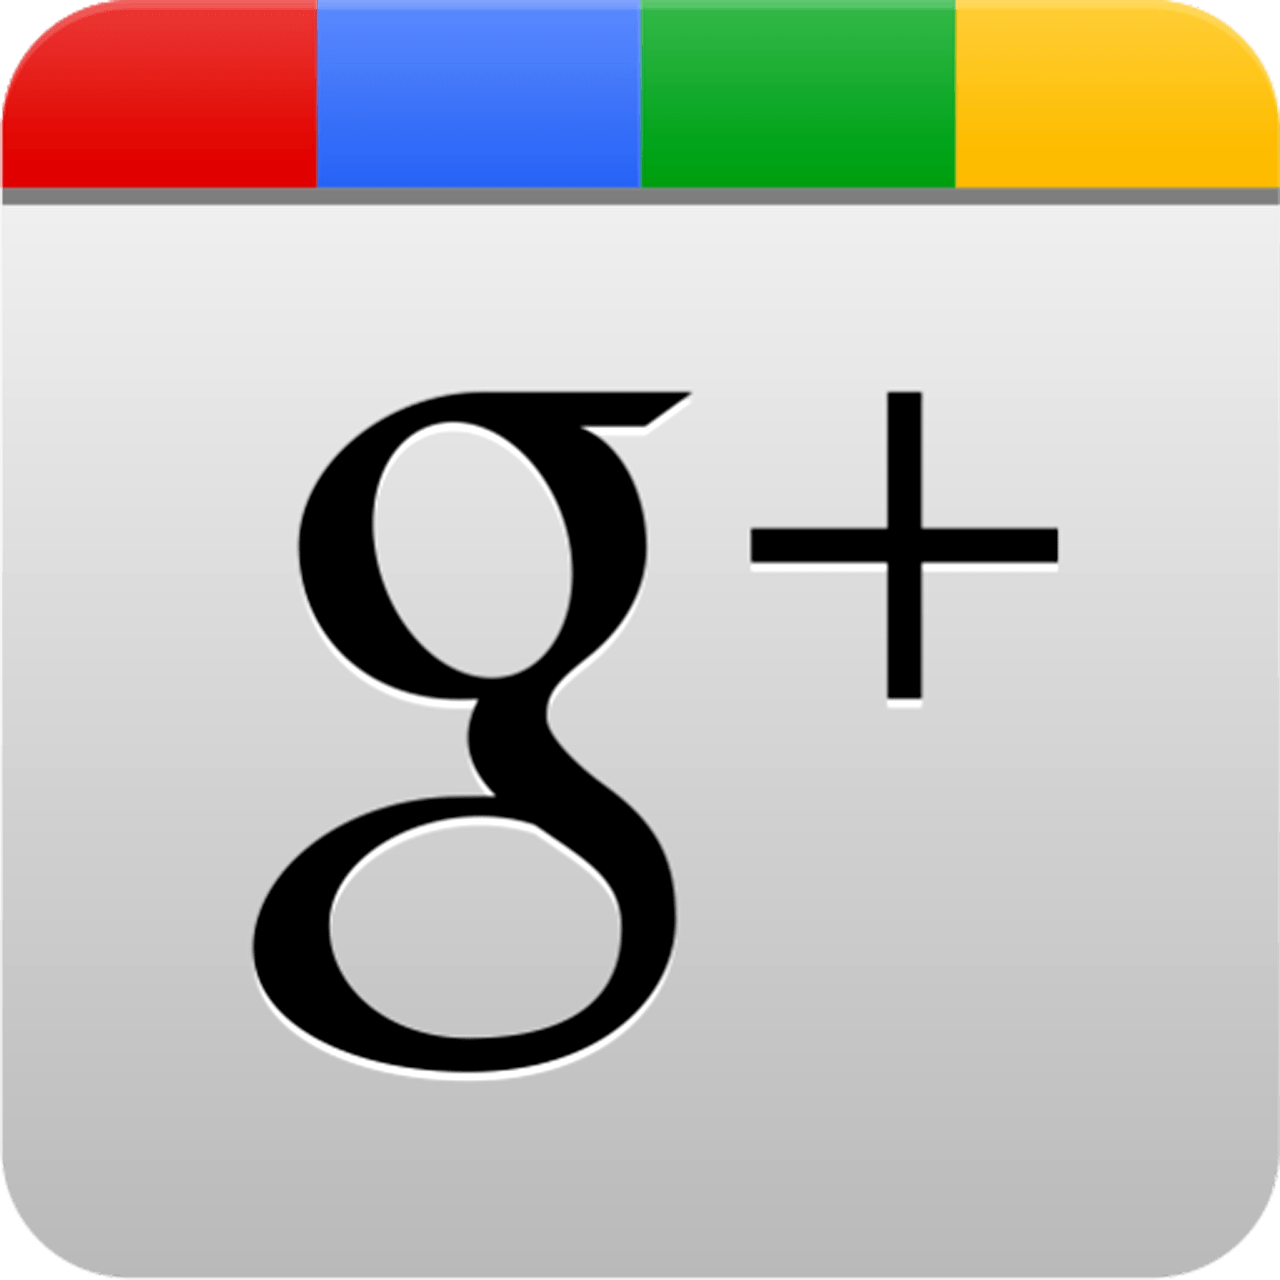 Cool Google Plus Logo - Google Plus Logo Grey White HD Wallpaper #1259 - Free Icons and PNG ...